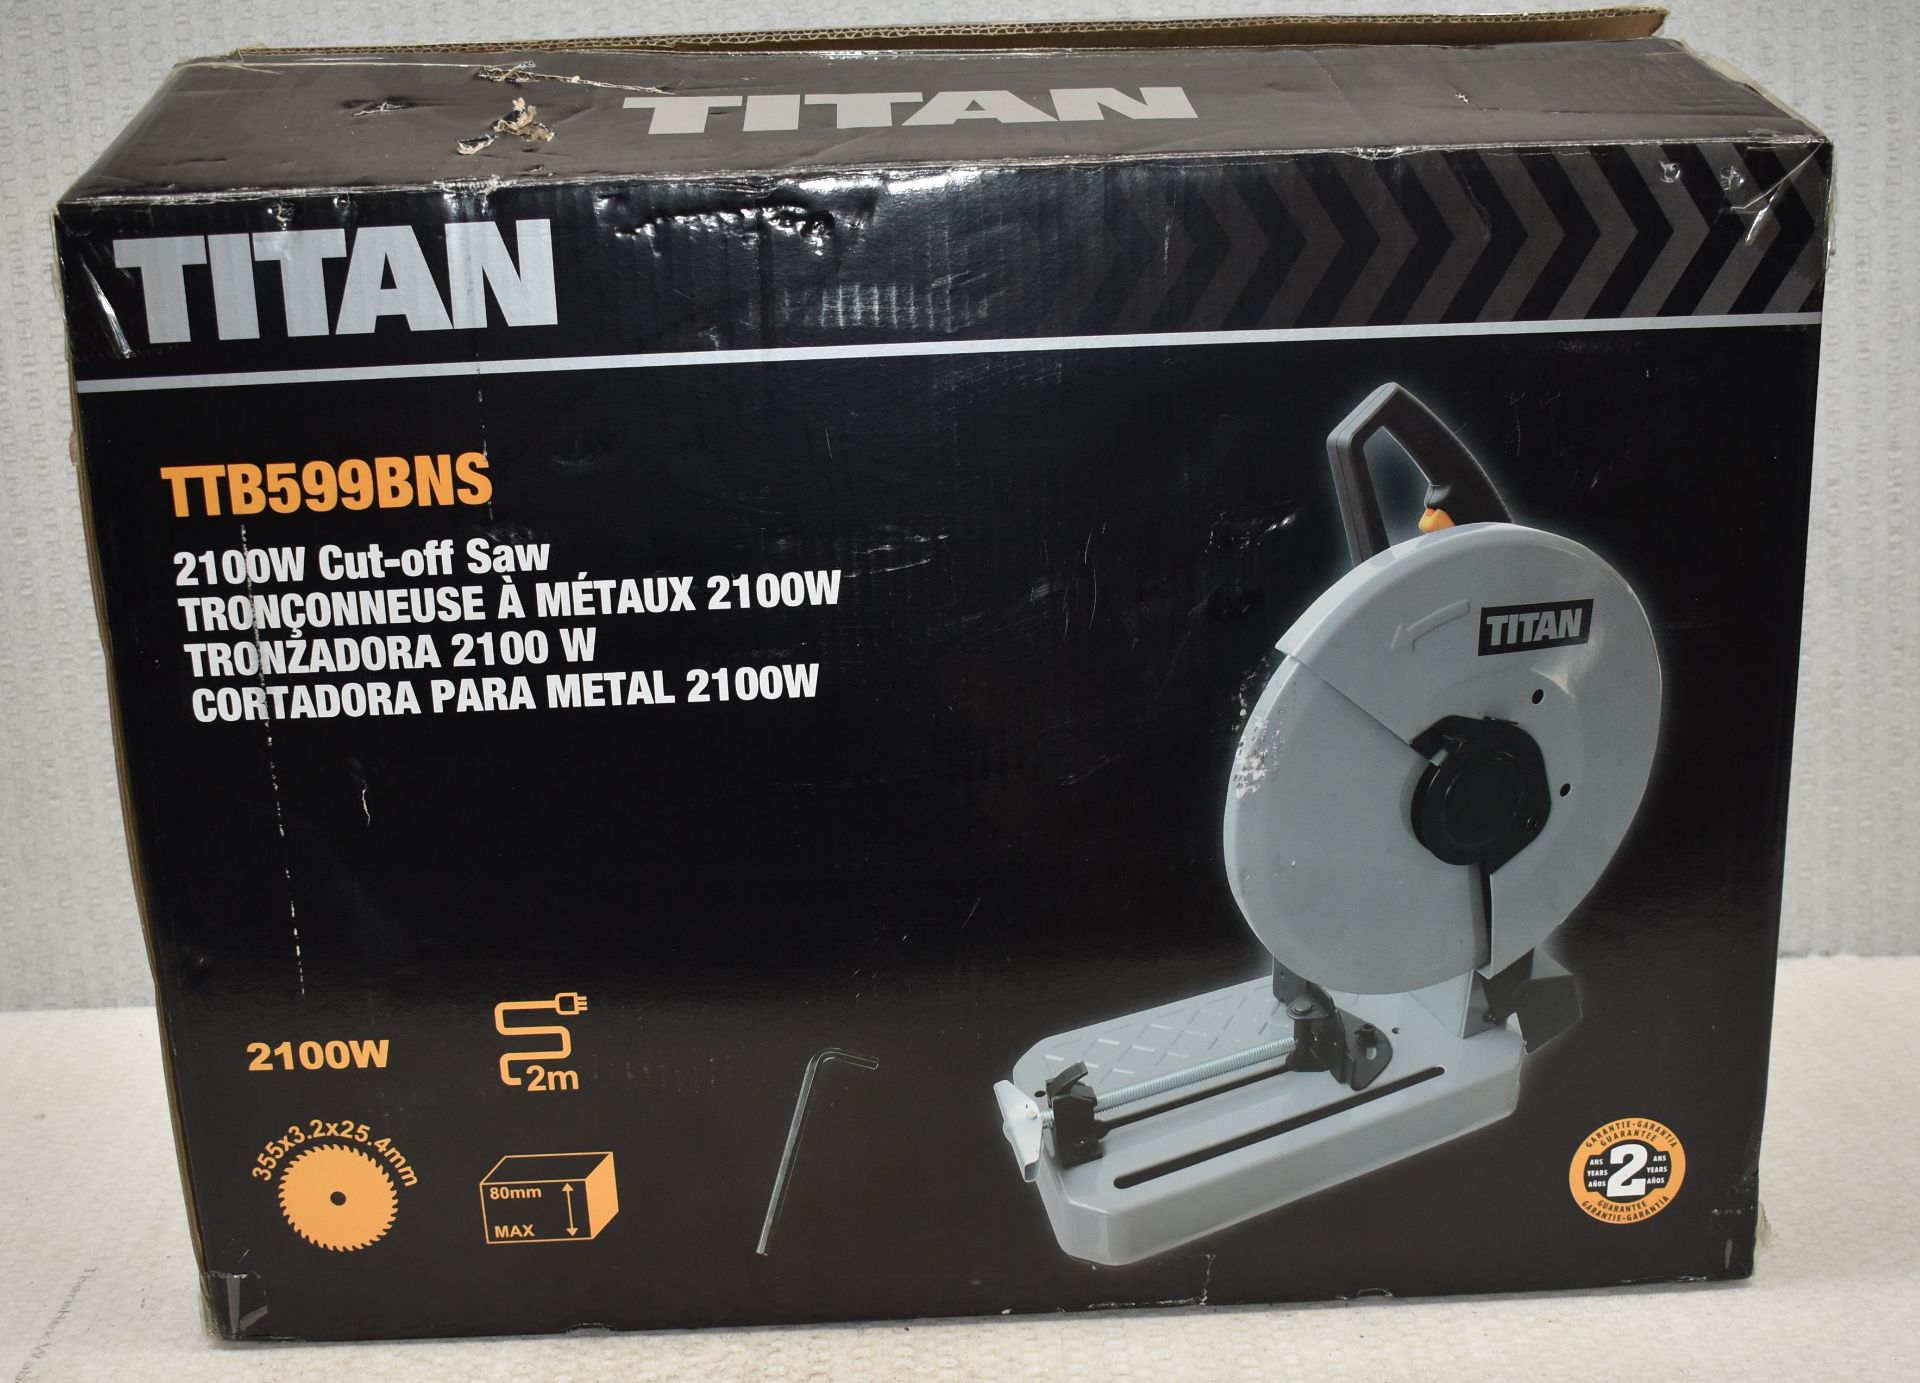 1 x TITAN 2100W 355Mm Cut-Off Saw / Chop Saw - Model: TTBS99BNS - Ref: K254 - CL905 - Location: Altr - Image 4 of 21